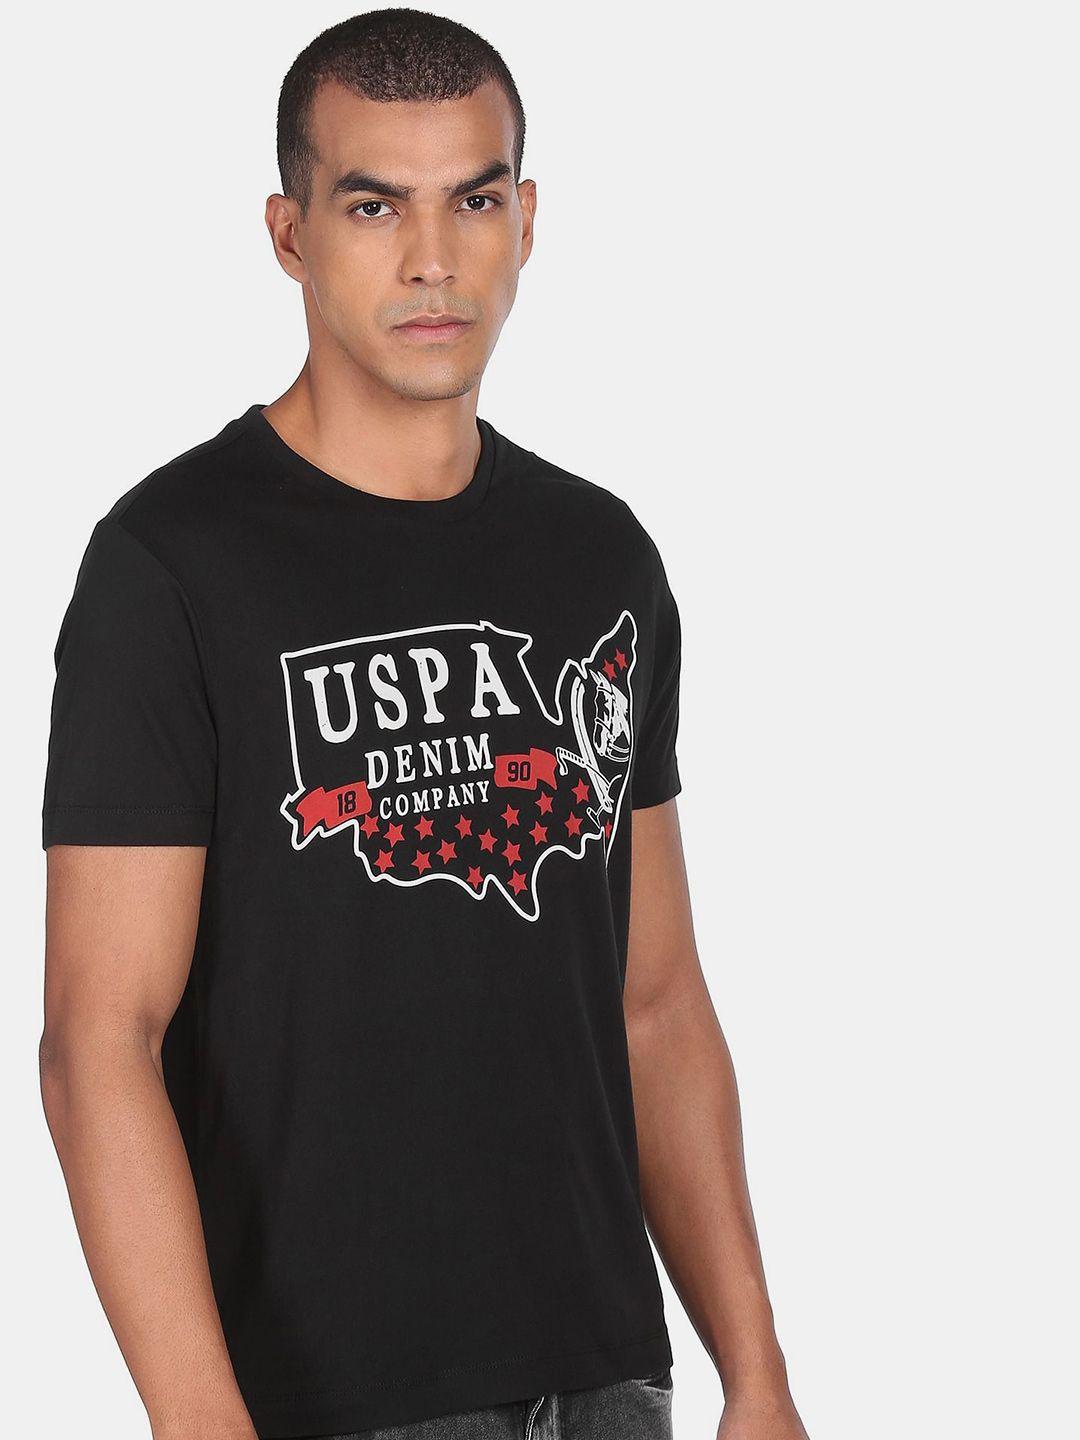 u.s. polo assn. denim co.men black typography printed t-shirt